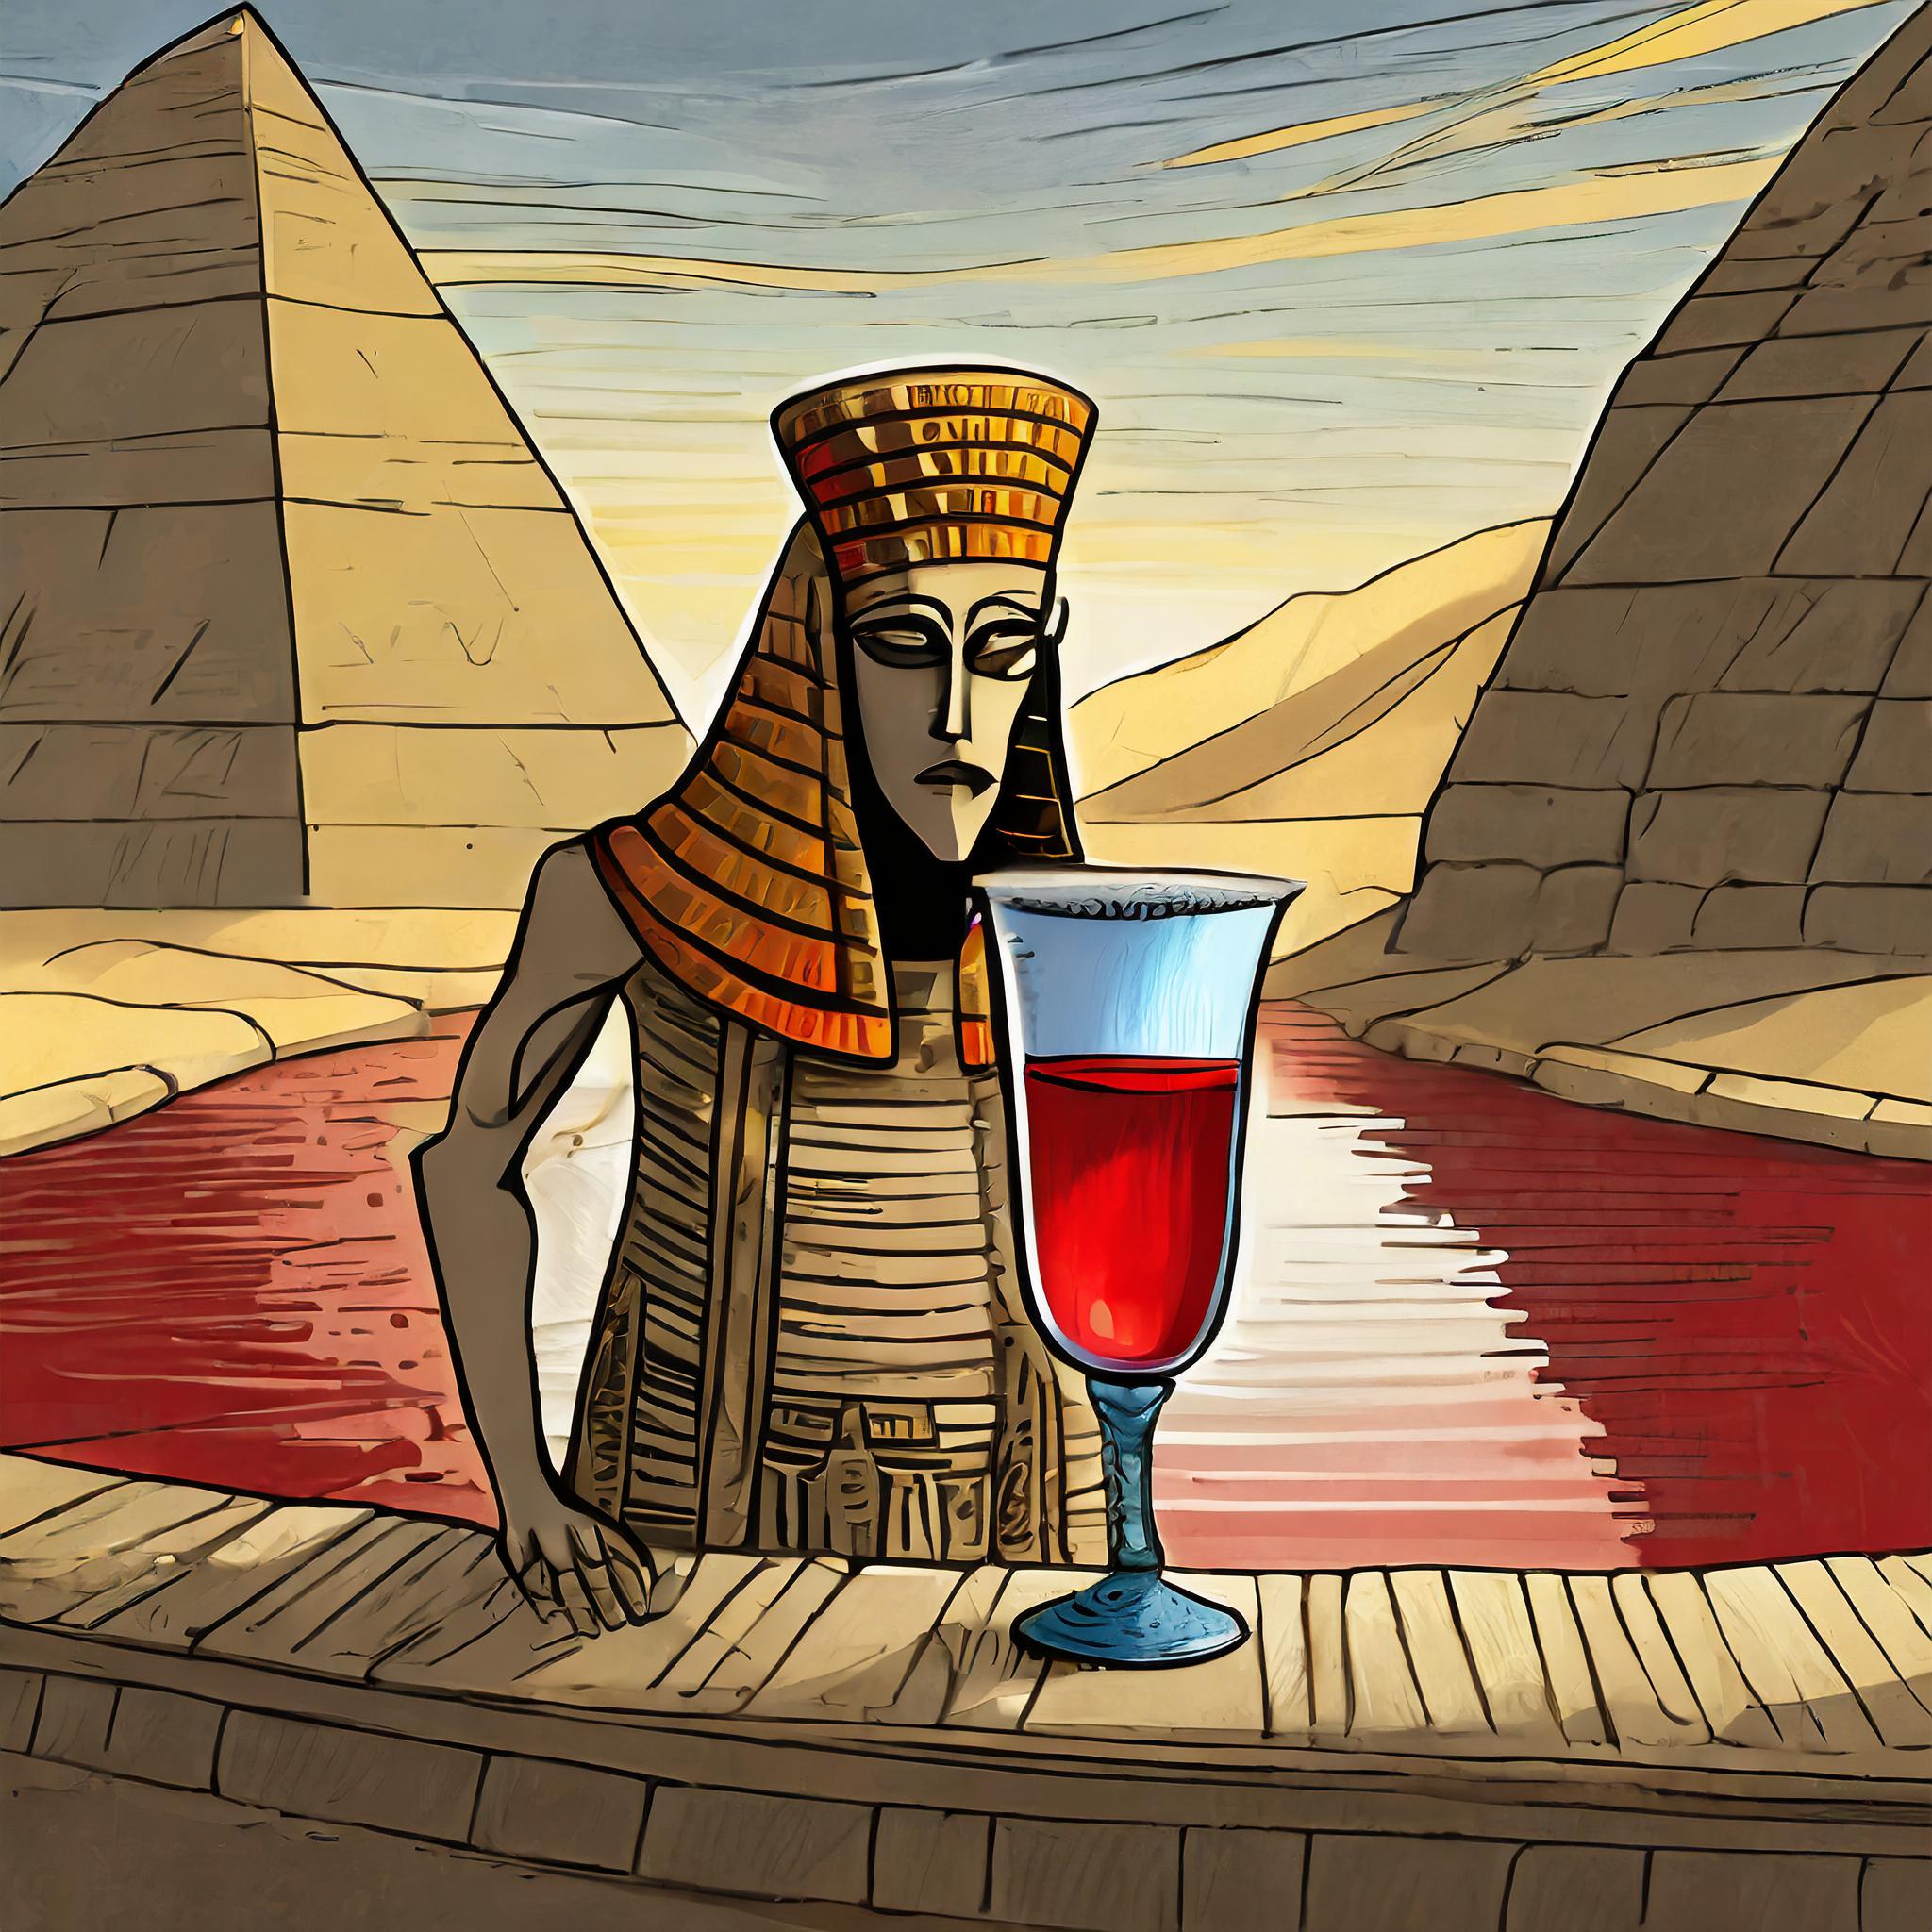 Firefly מצרי מלפני 3000 שנה שותה כוס מים אדומים מאד מאד במצרים העתיקה 41595.jpg